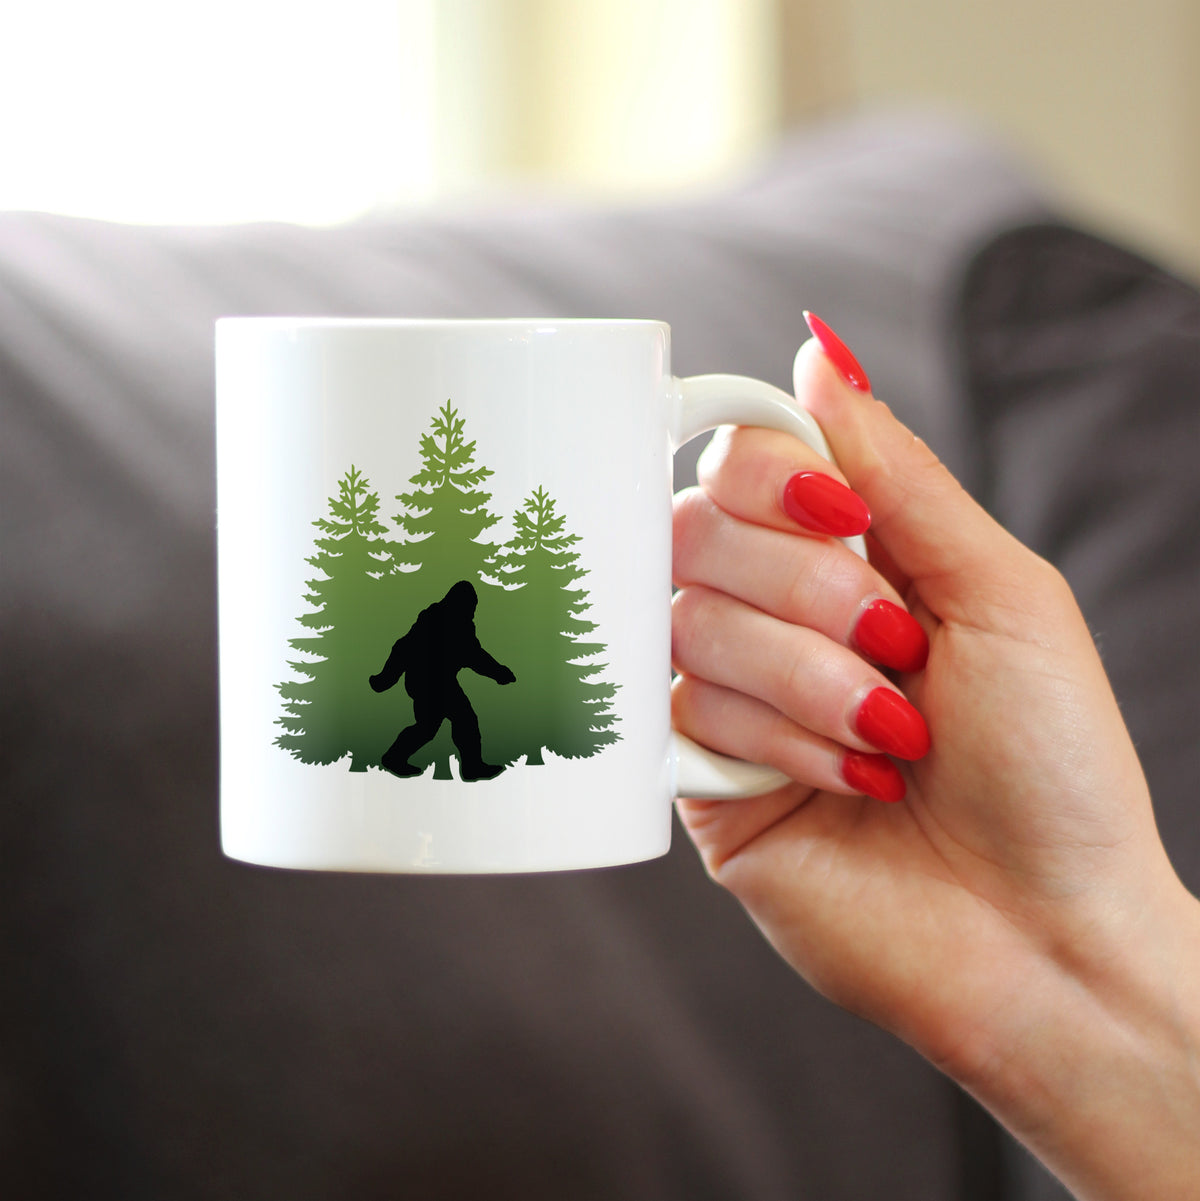 Bigfoot Coffee Mug - Funny Bigfoot Gifts for Sasquatch Enthusiasts